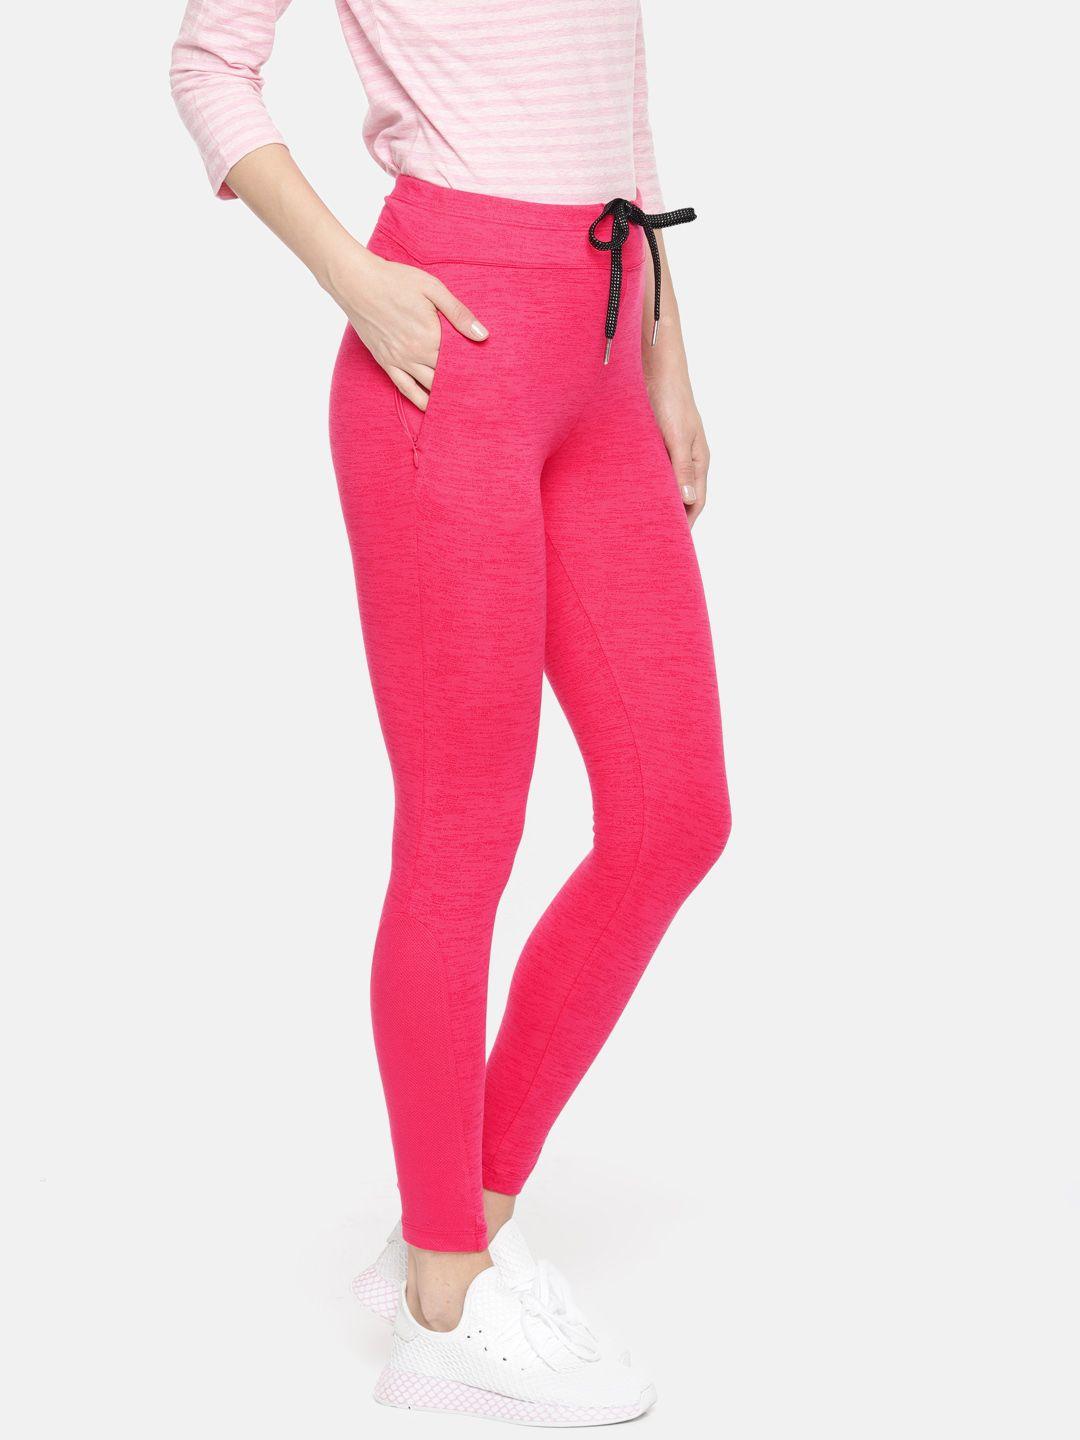 jockey women pink solid yoga tights